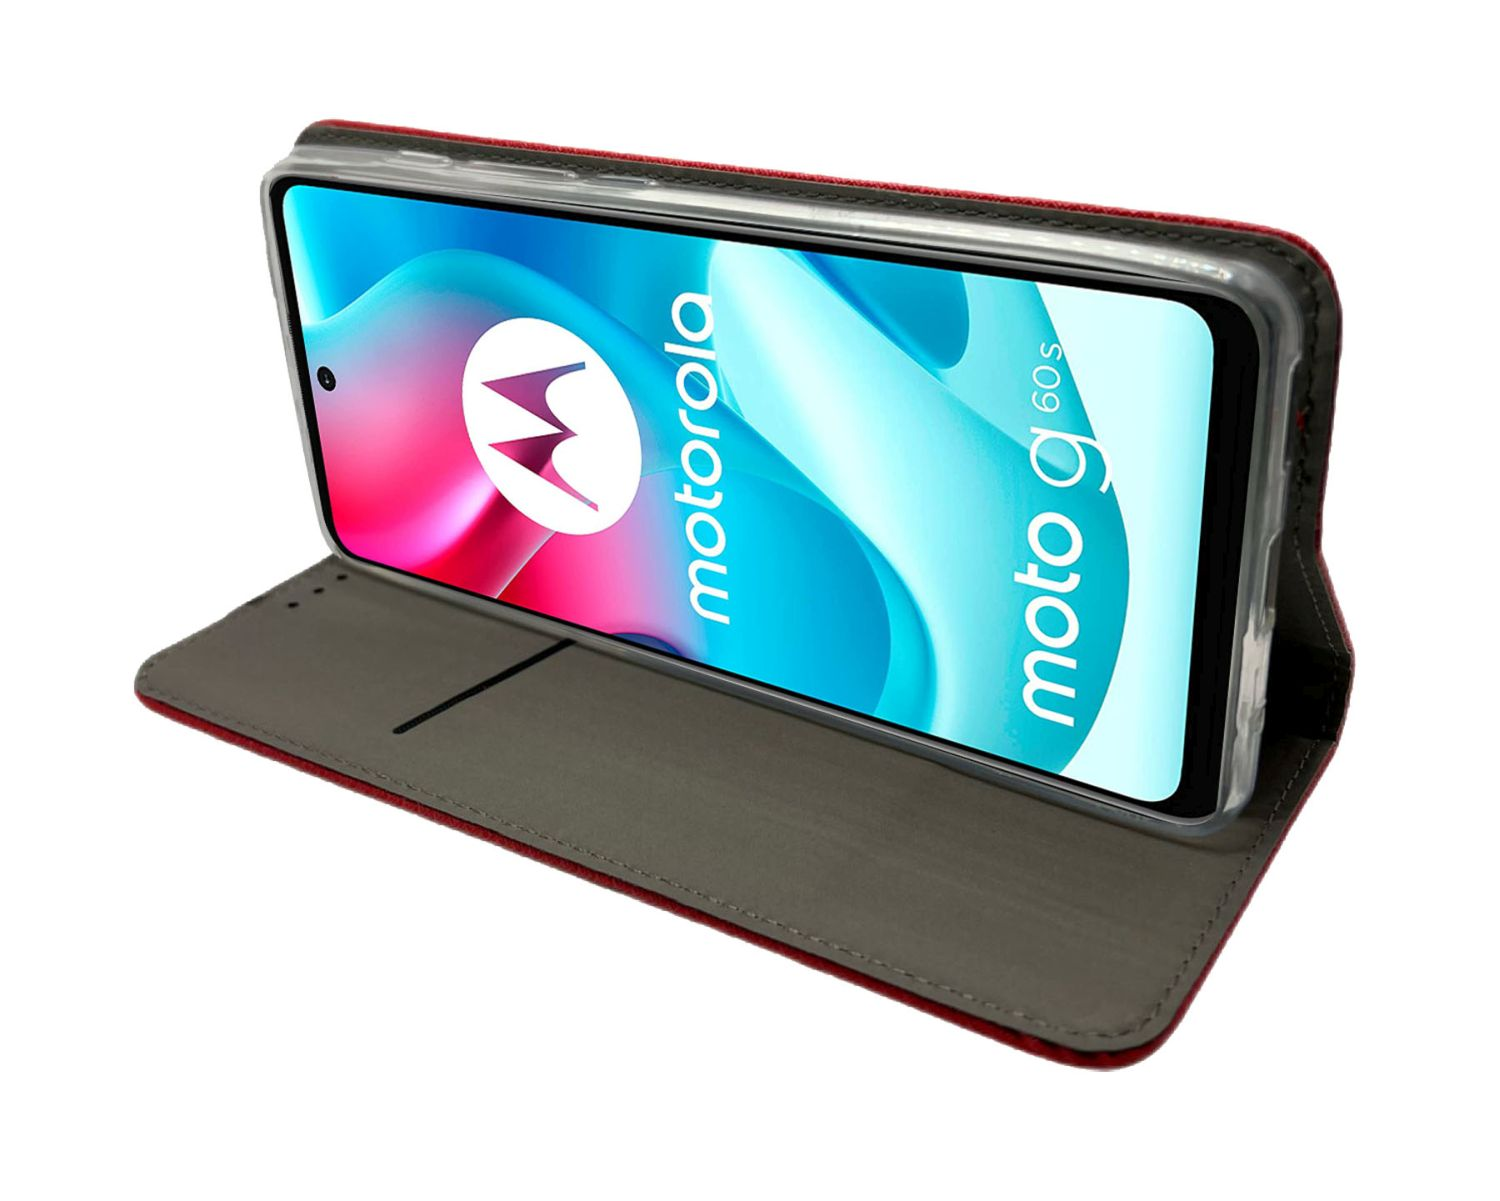 Moto Bookcover, G62 Motorola, Buch-Tasche, Elegante Rot COFI 5G,